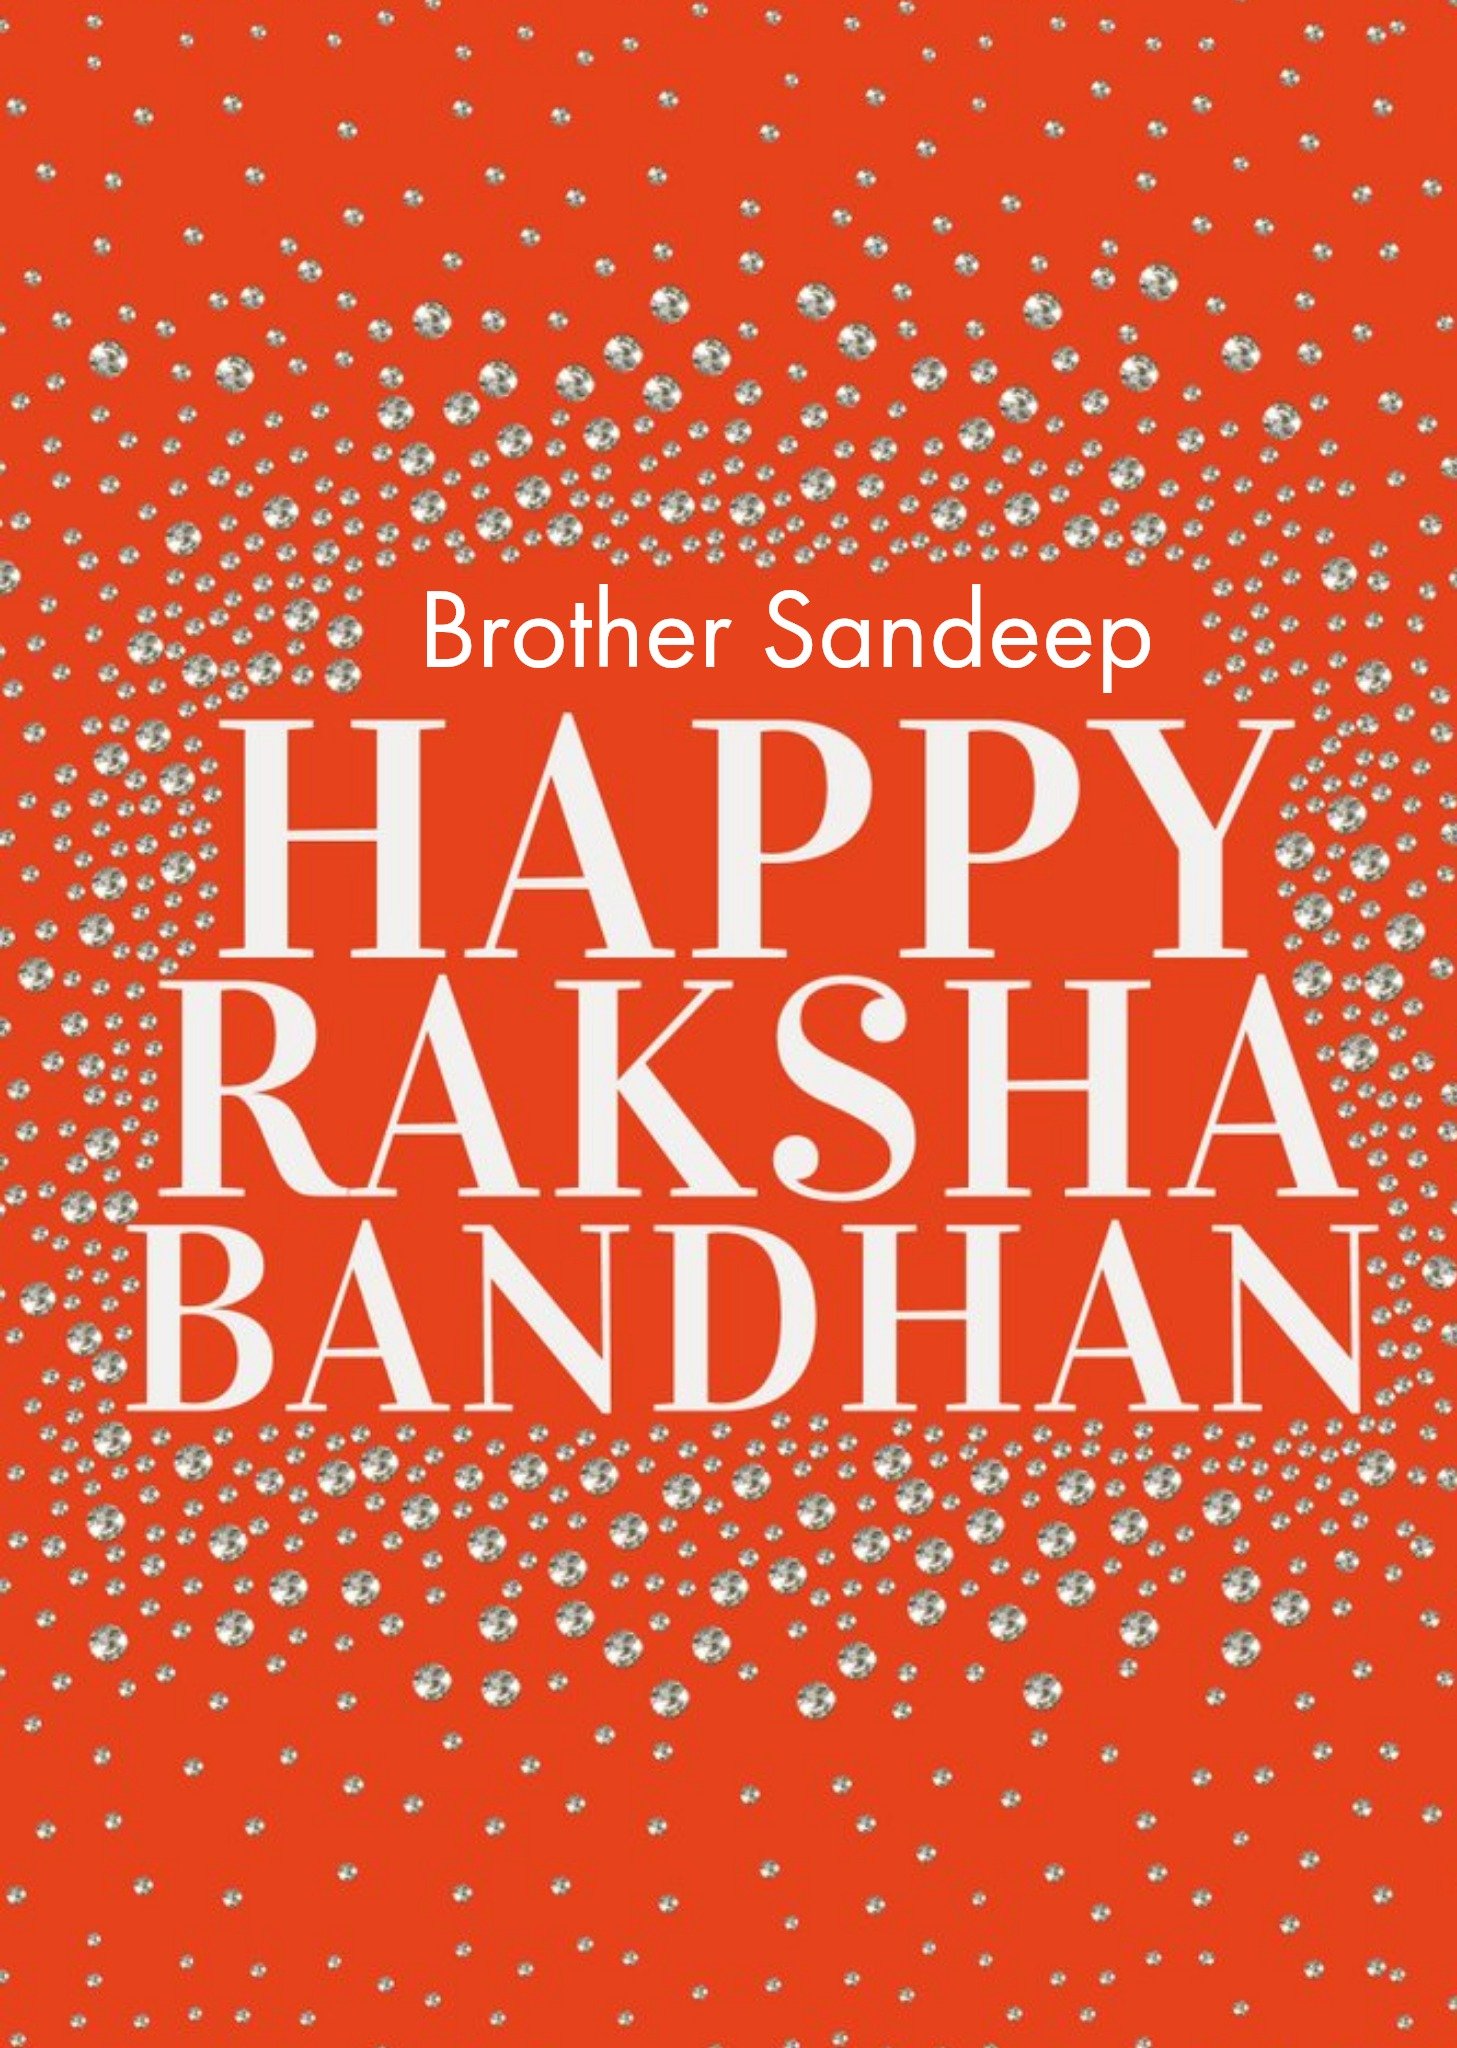 Eastern Print Studio Abstract Illustration Happy Raksha Bandhan Brother Card, Large